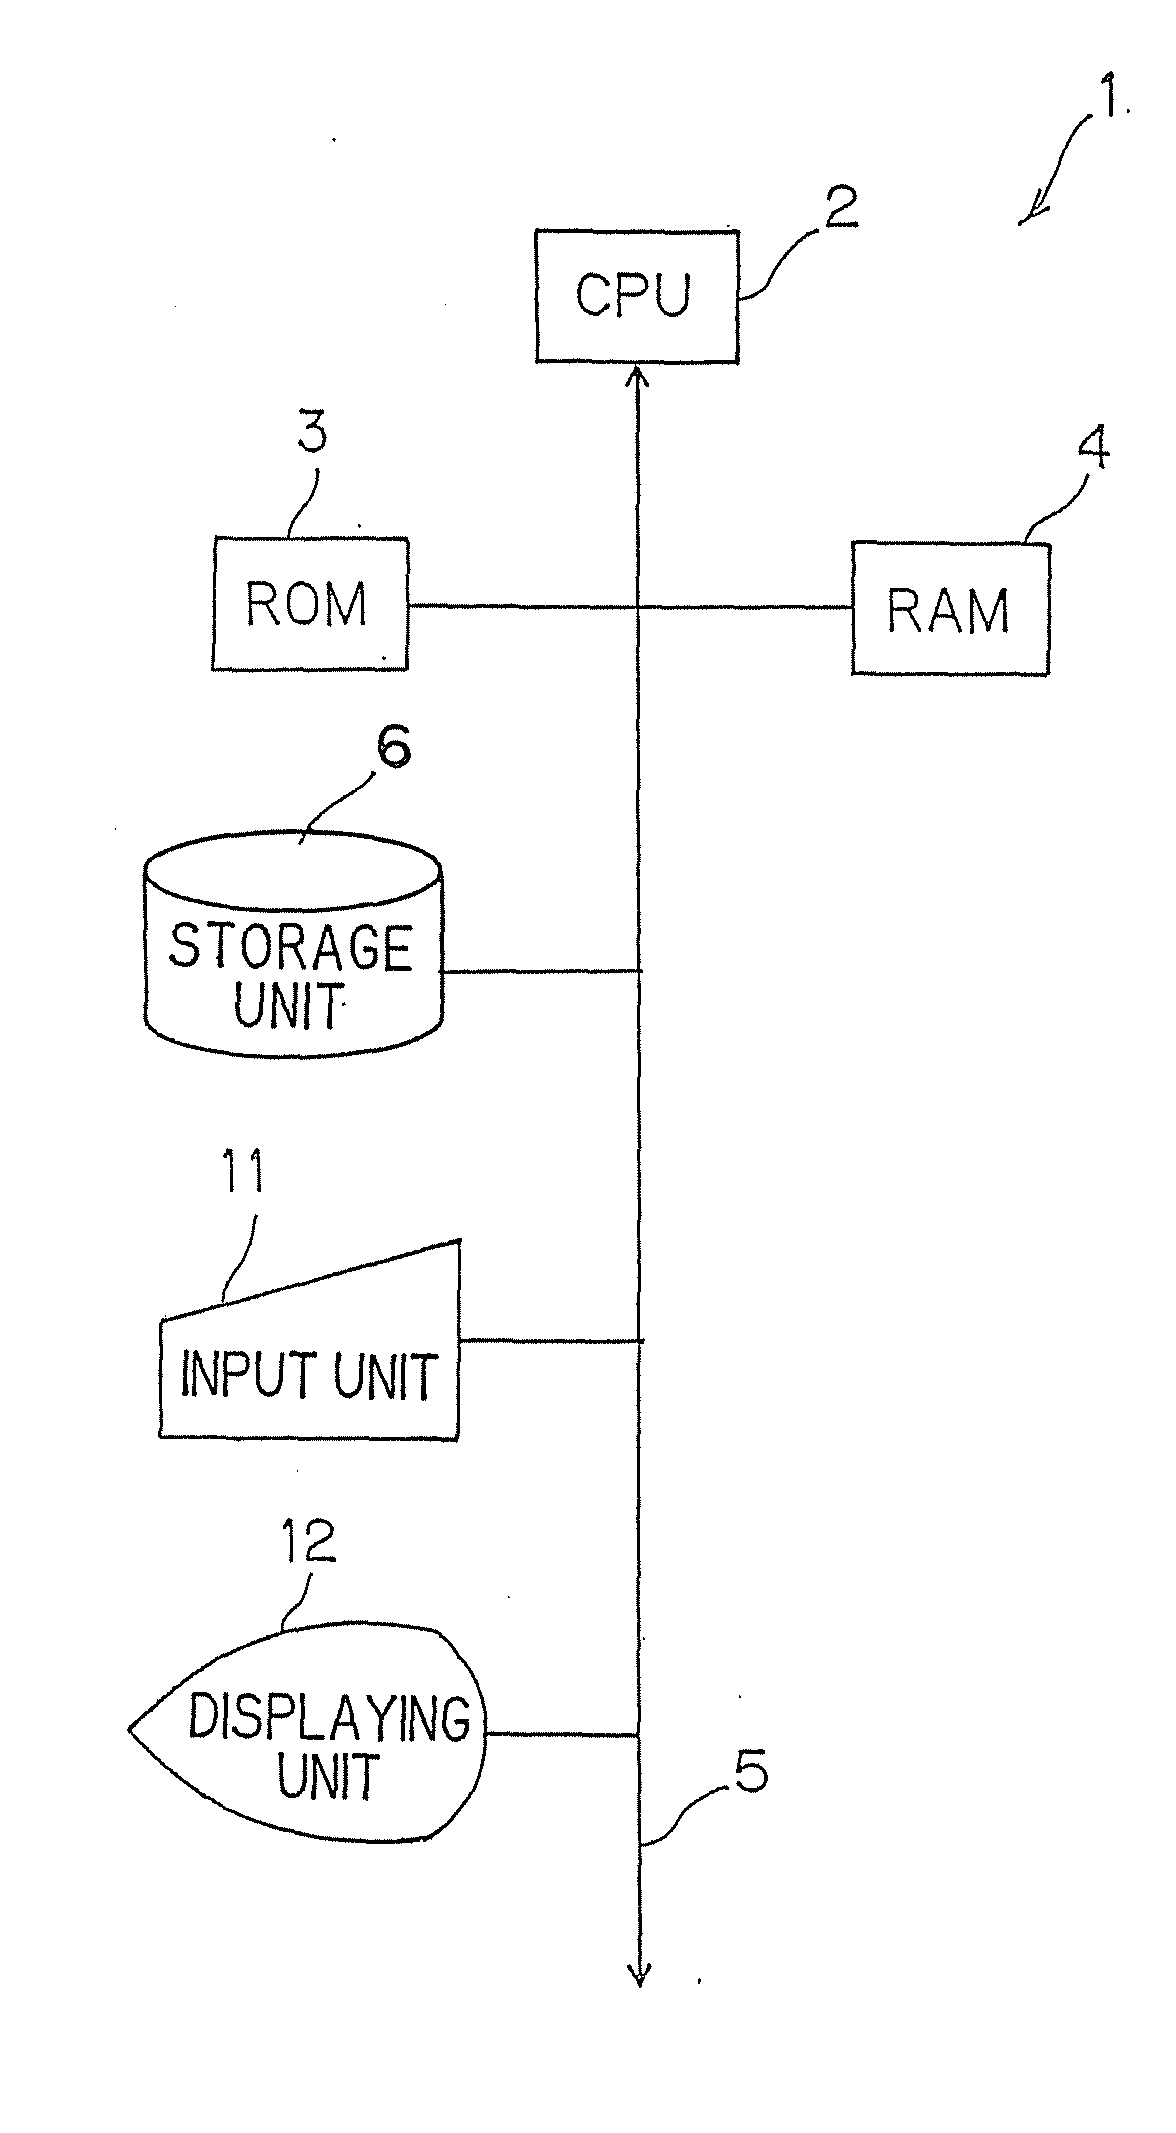 Speaker adaptation apparatus and program thereof